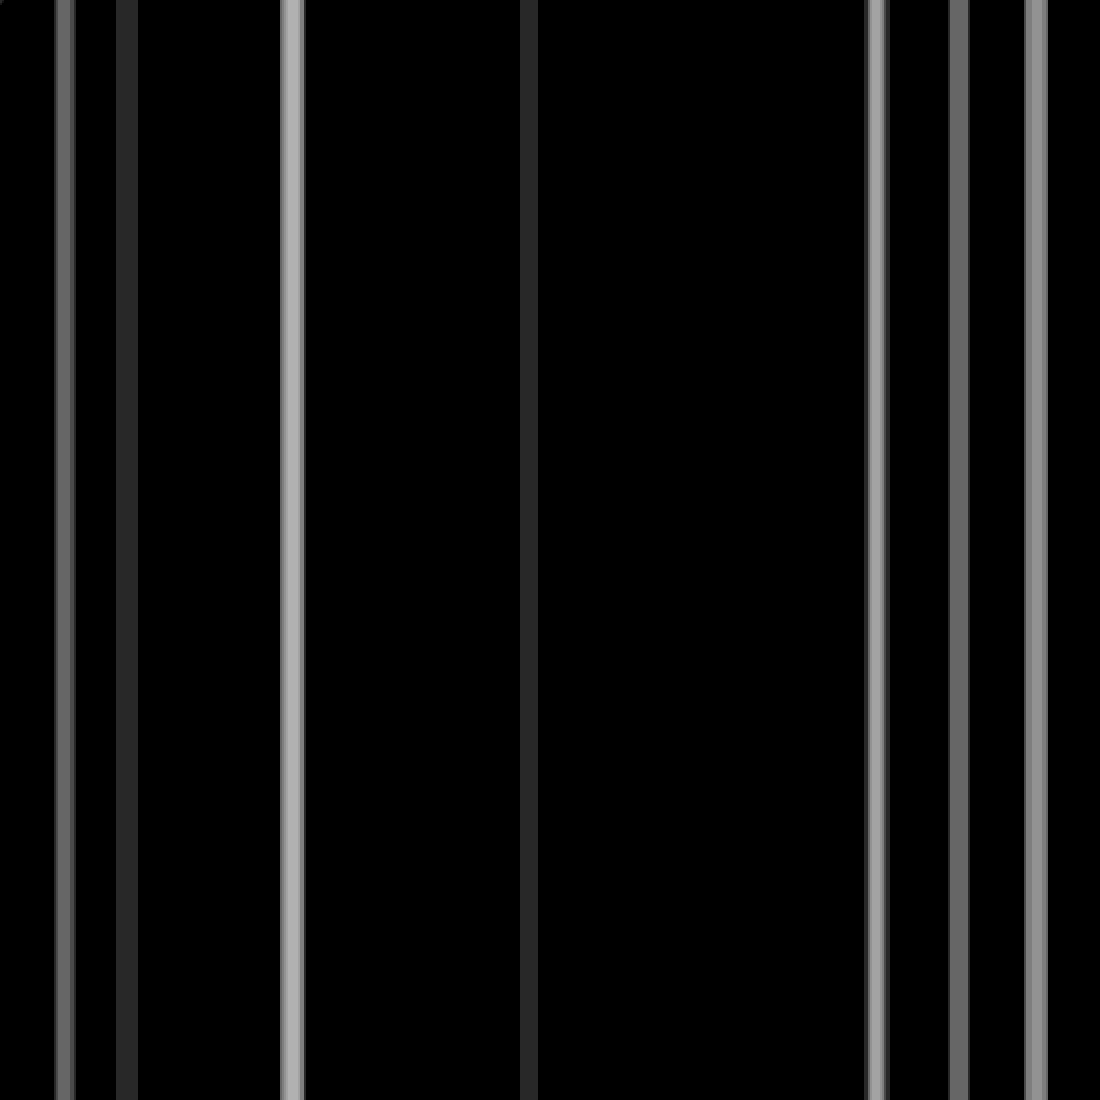 Moving Stripes (1)